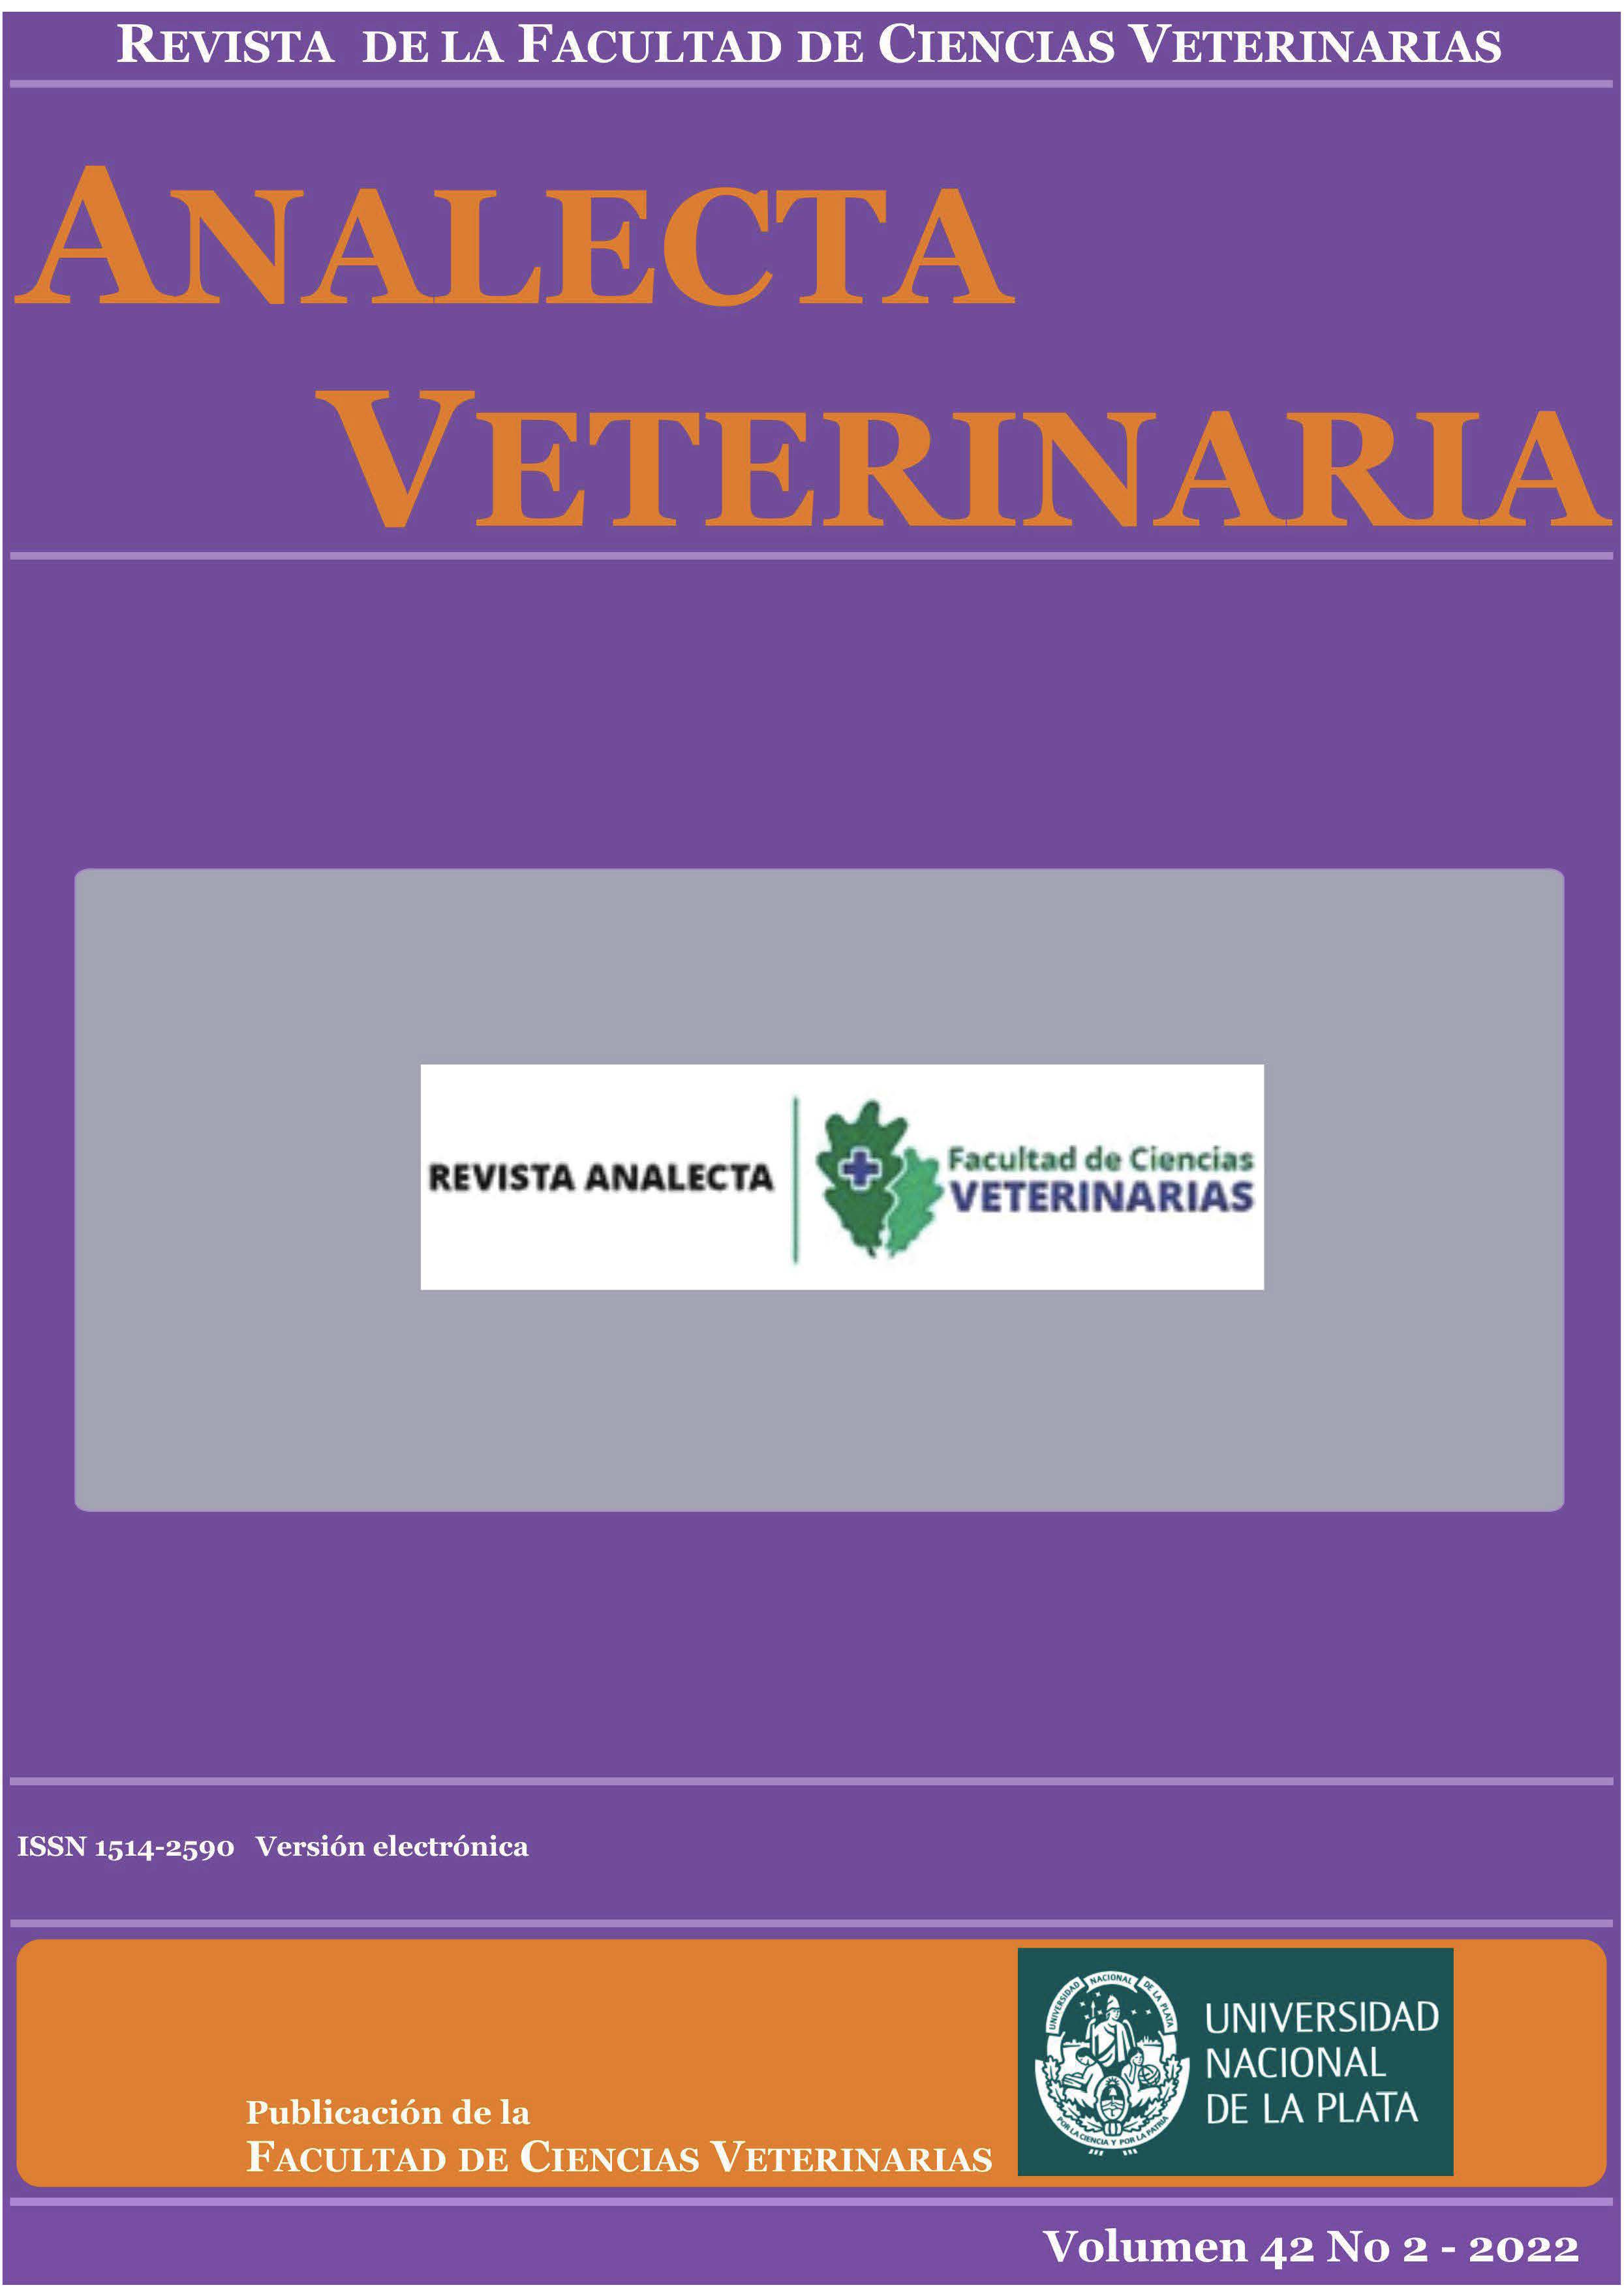 					Ver Vol. 42 Núm. 2 (2022): Analecta Veterinaria
				